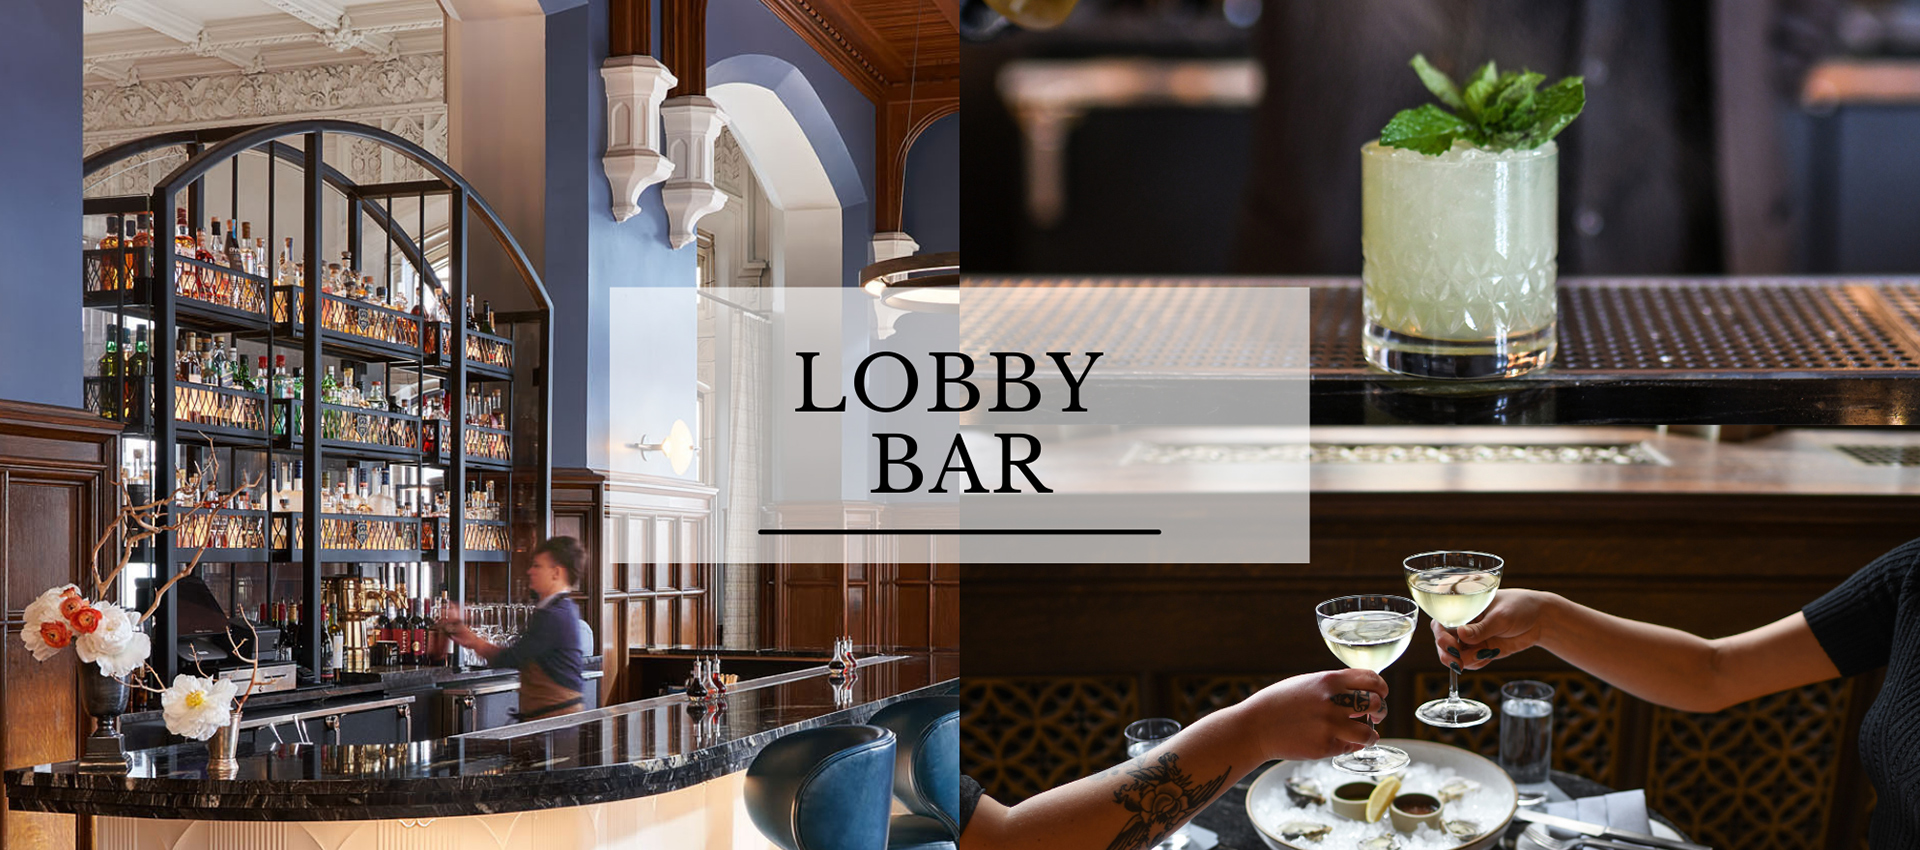 Lobby Bar tiled images